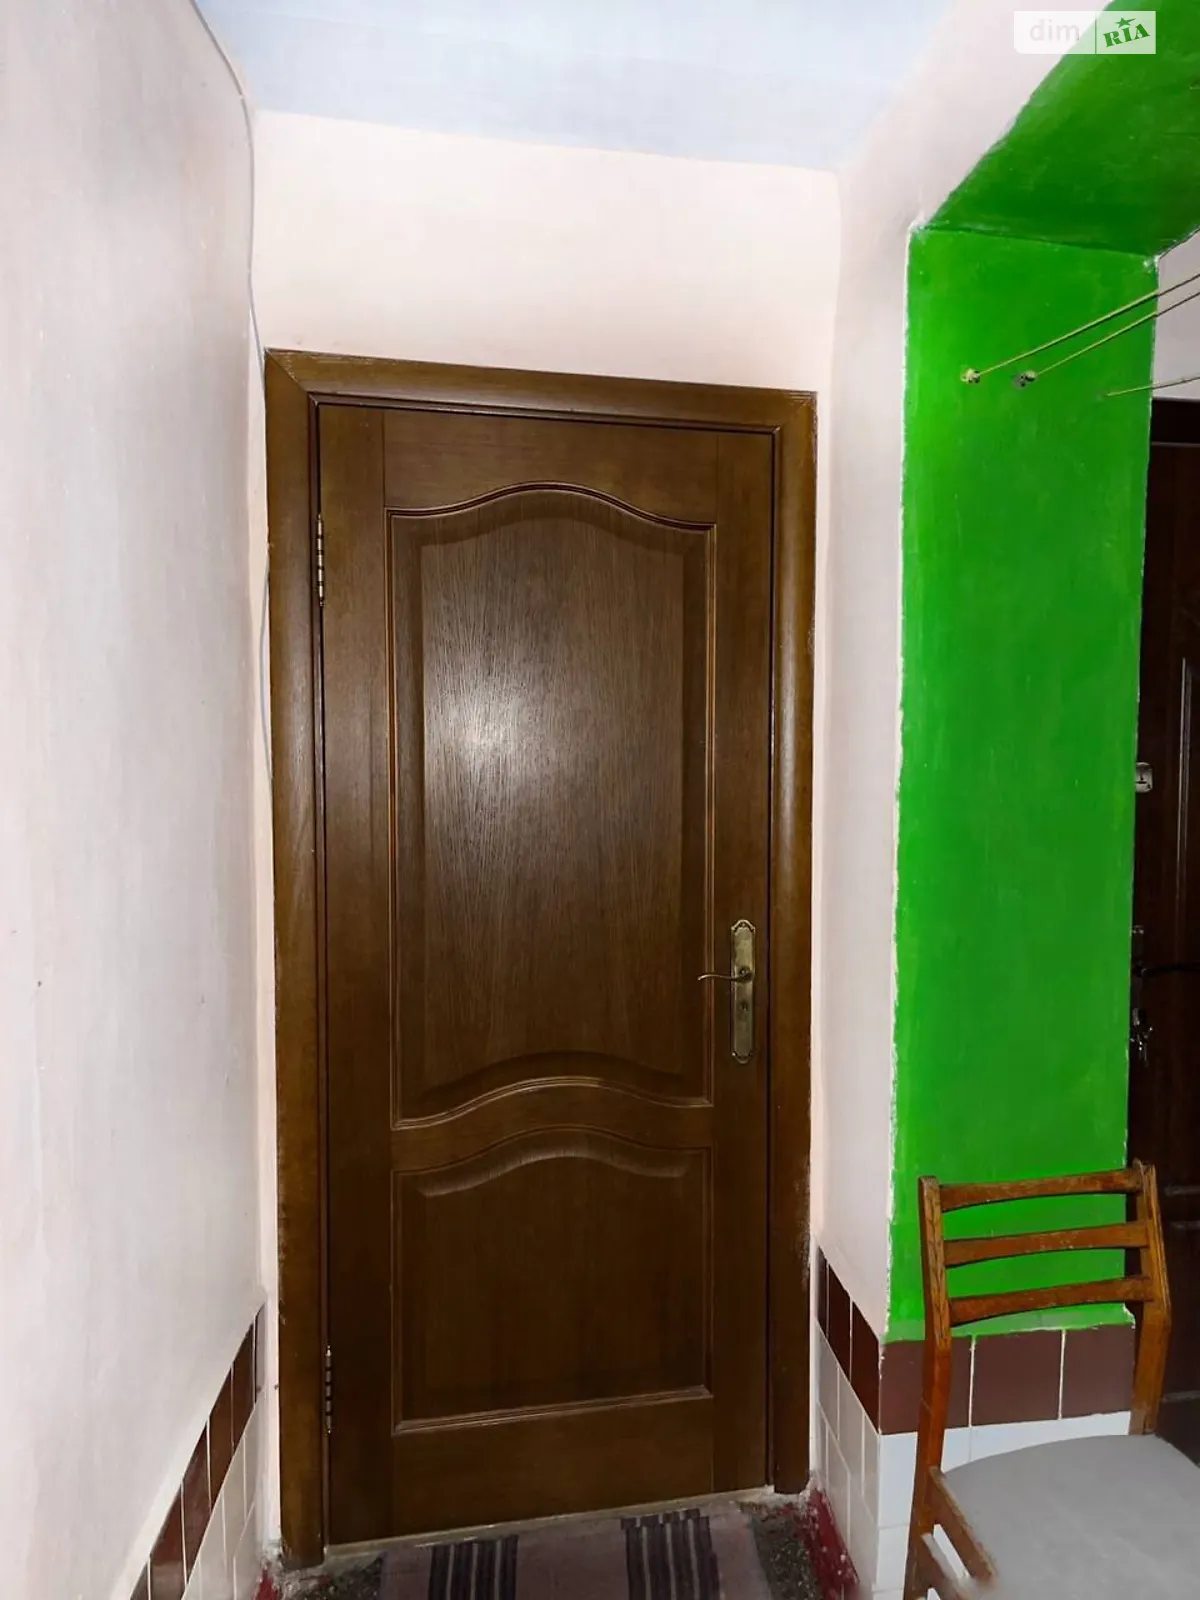 Продается комната 17 кв. м в Тернополе - фото 2